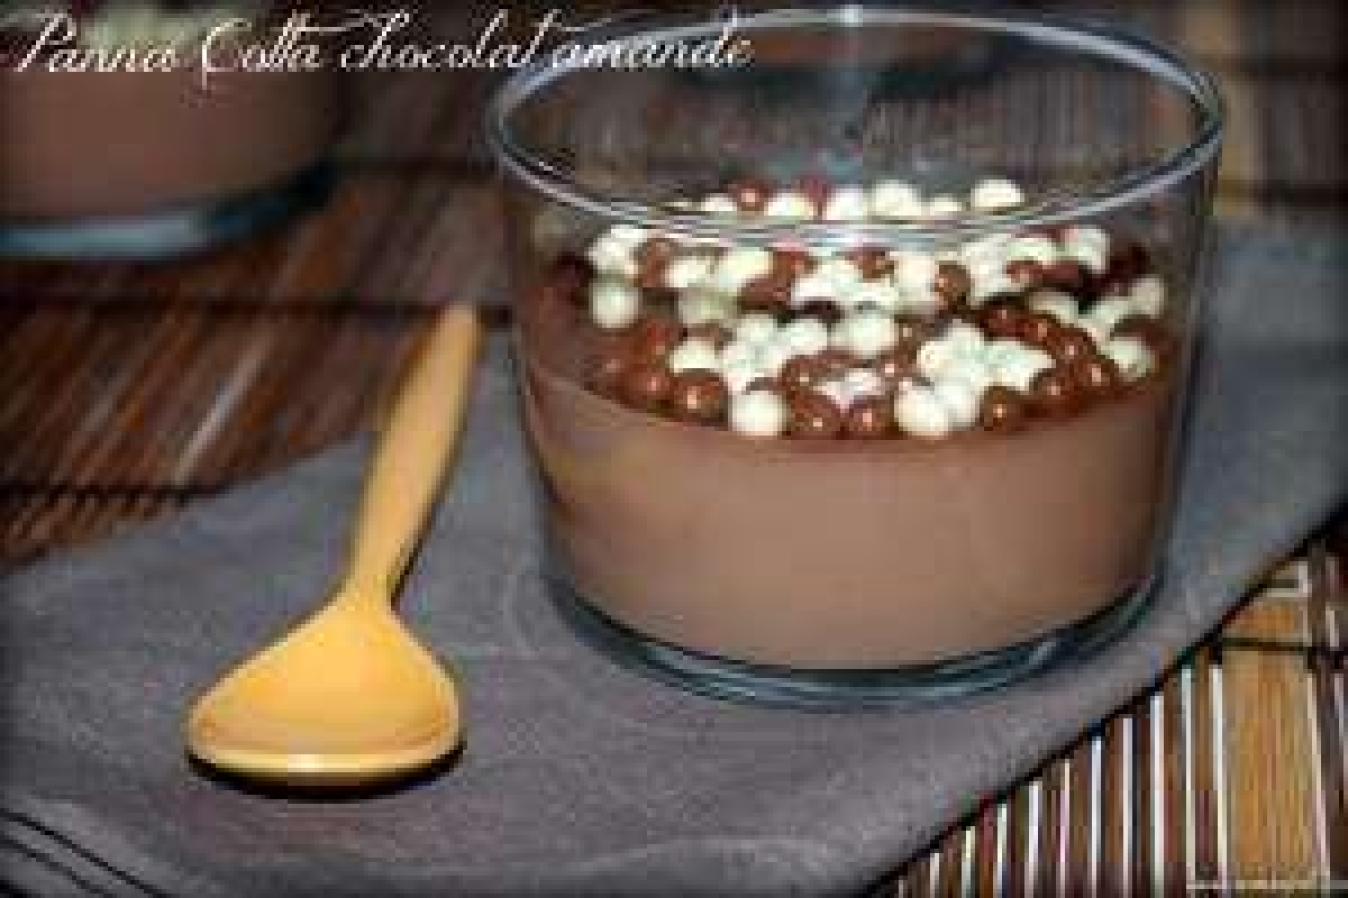 La recette de Sam’ : Panna cotta chocolat amande